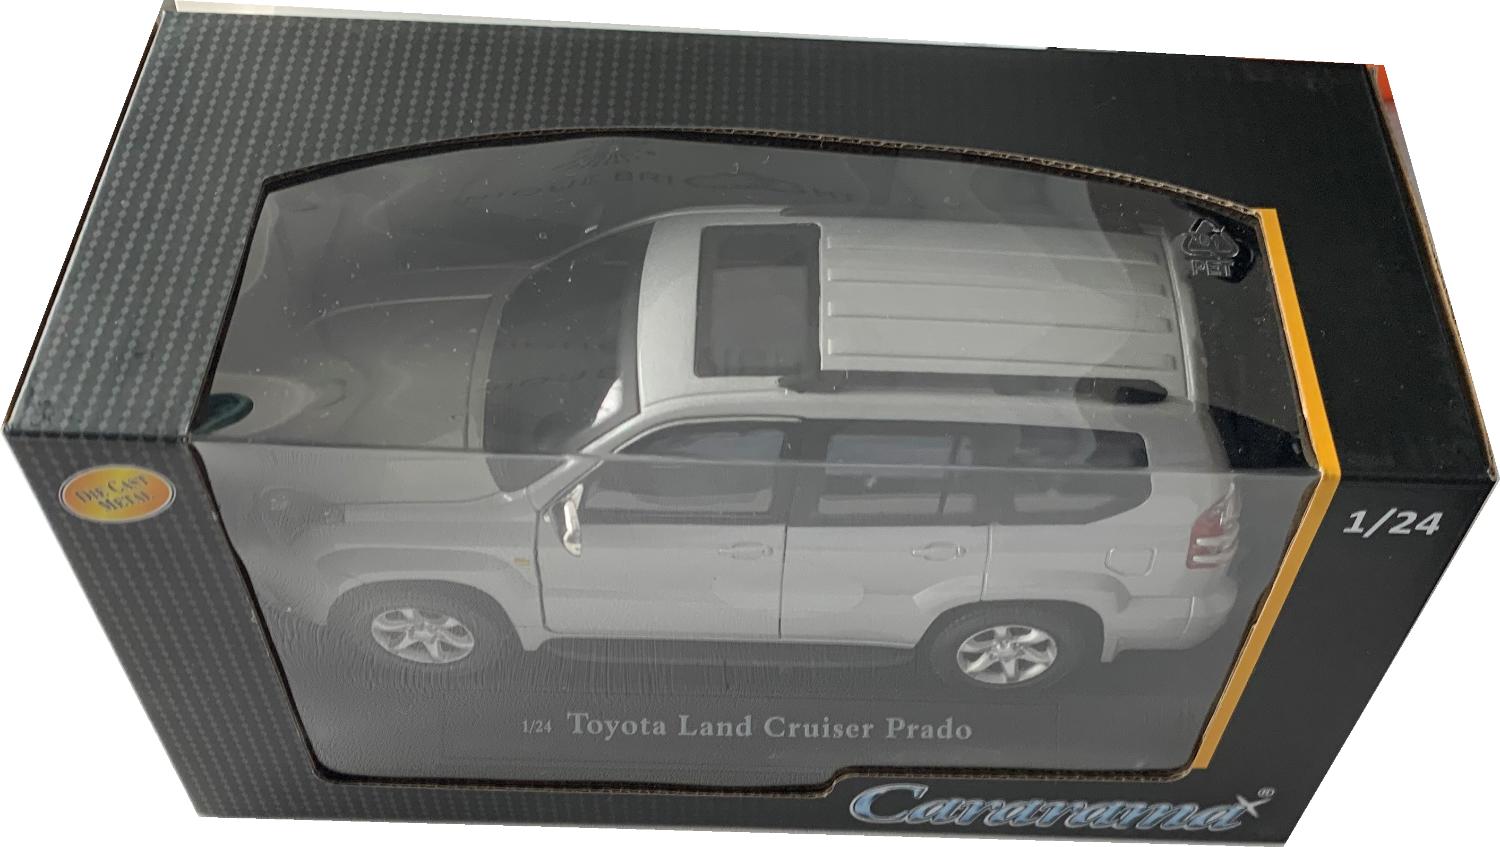 Toyota Land Cruiser Prado in silver 1:24 scale model from Cararama